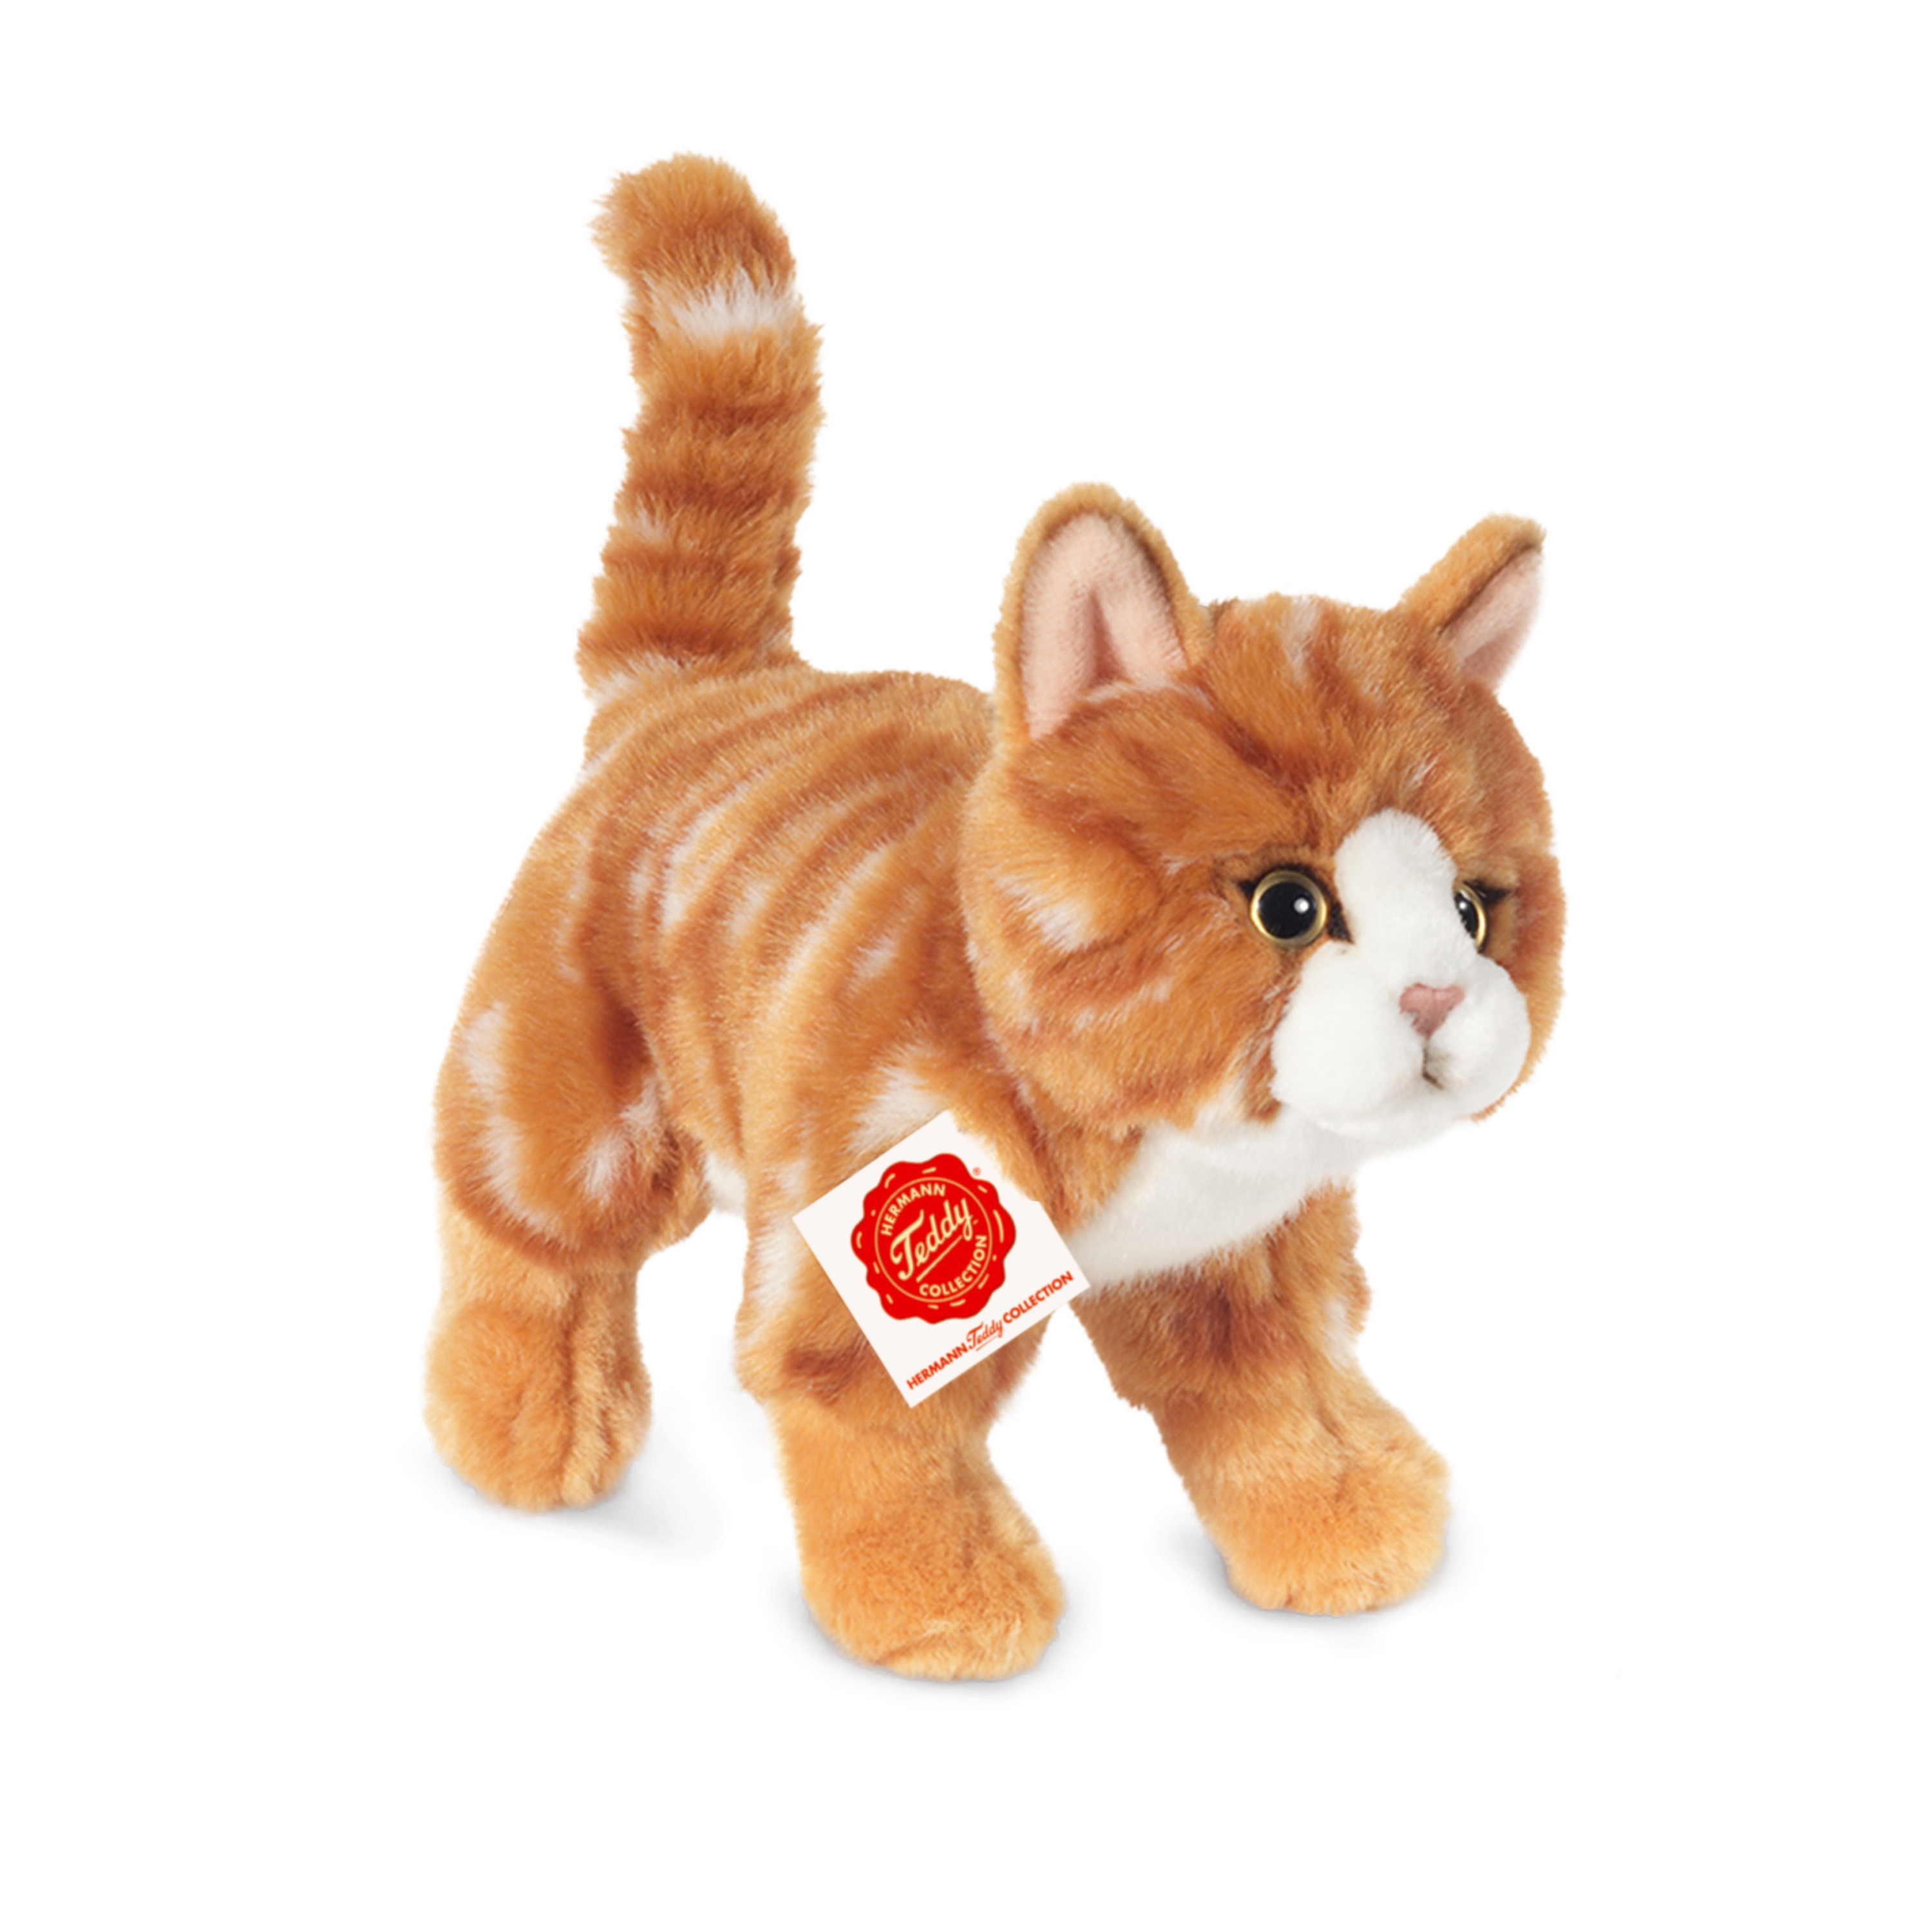 Knuffeldier kat-poes zachte pluche stof premium kwaliteit knuffels rood-oranje 20 cm